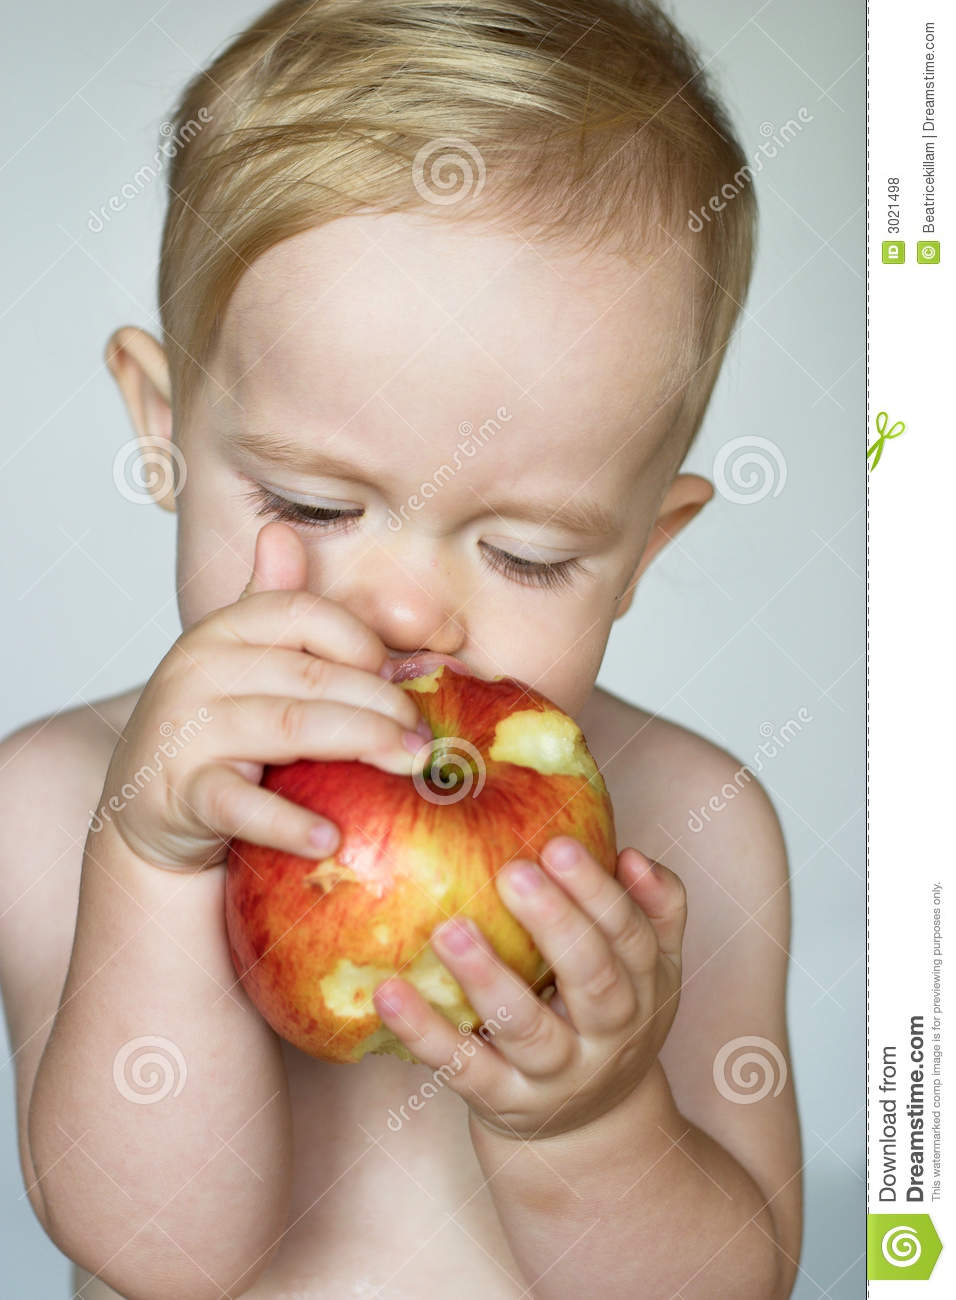 Toddler Eating Apple Royalty Free Stock Photos   Image  3021498